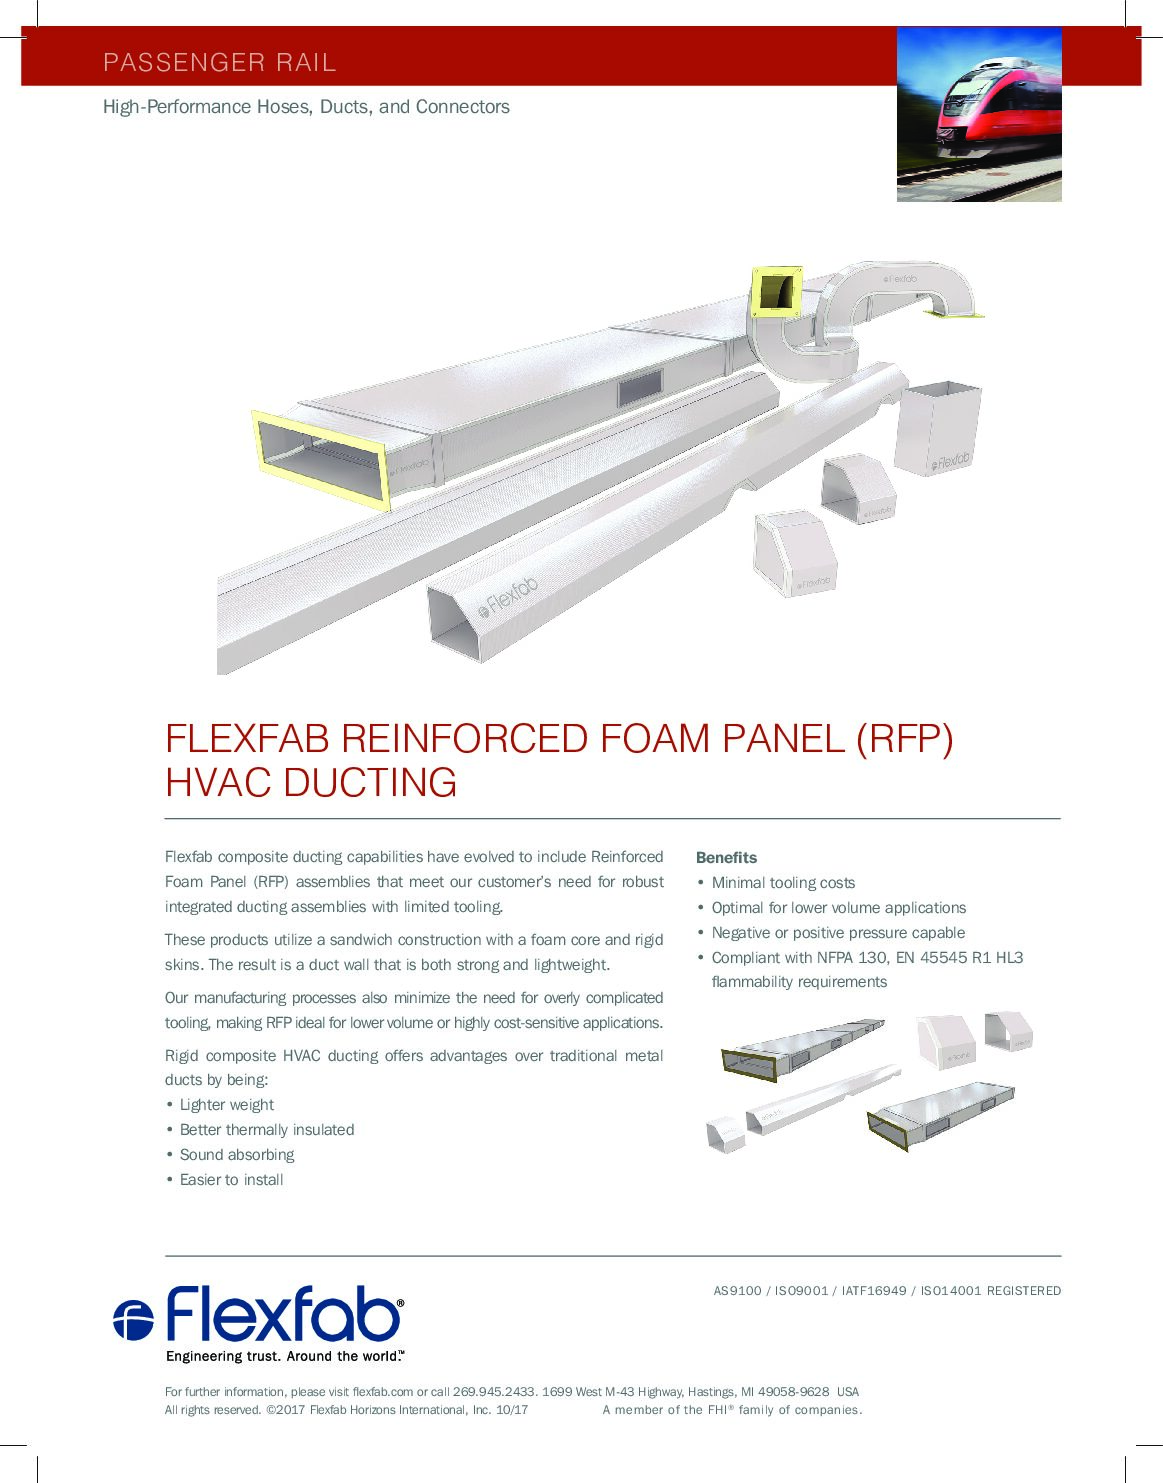 Reinforced Foam Panel (RFP) HVAC Ducting